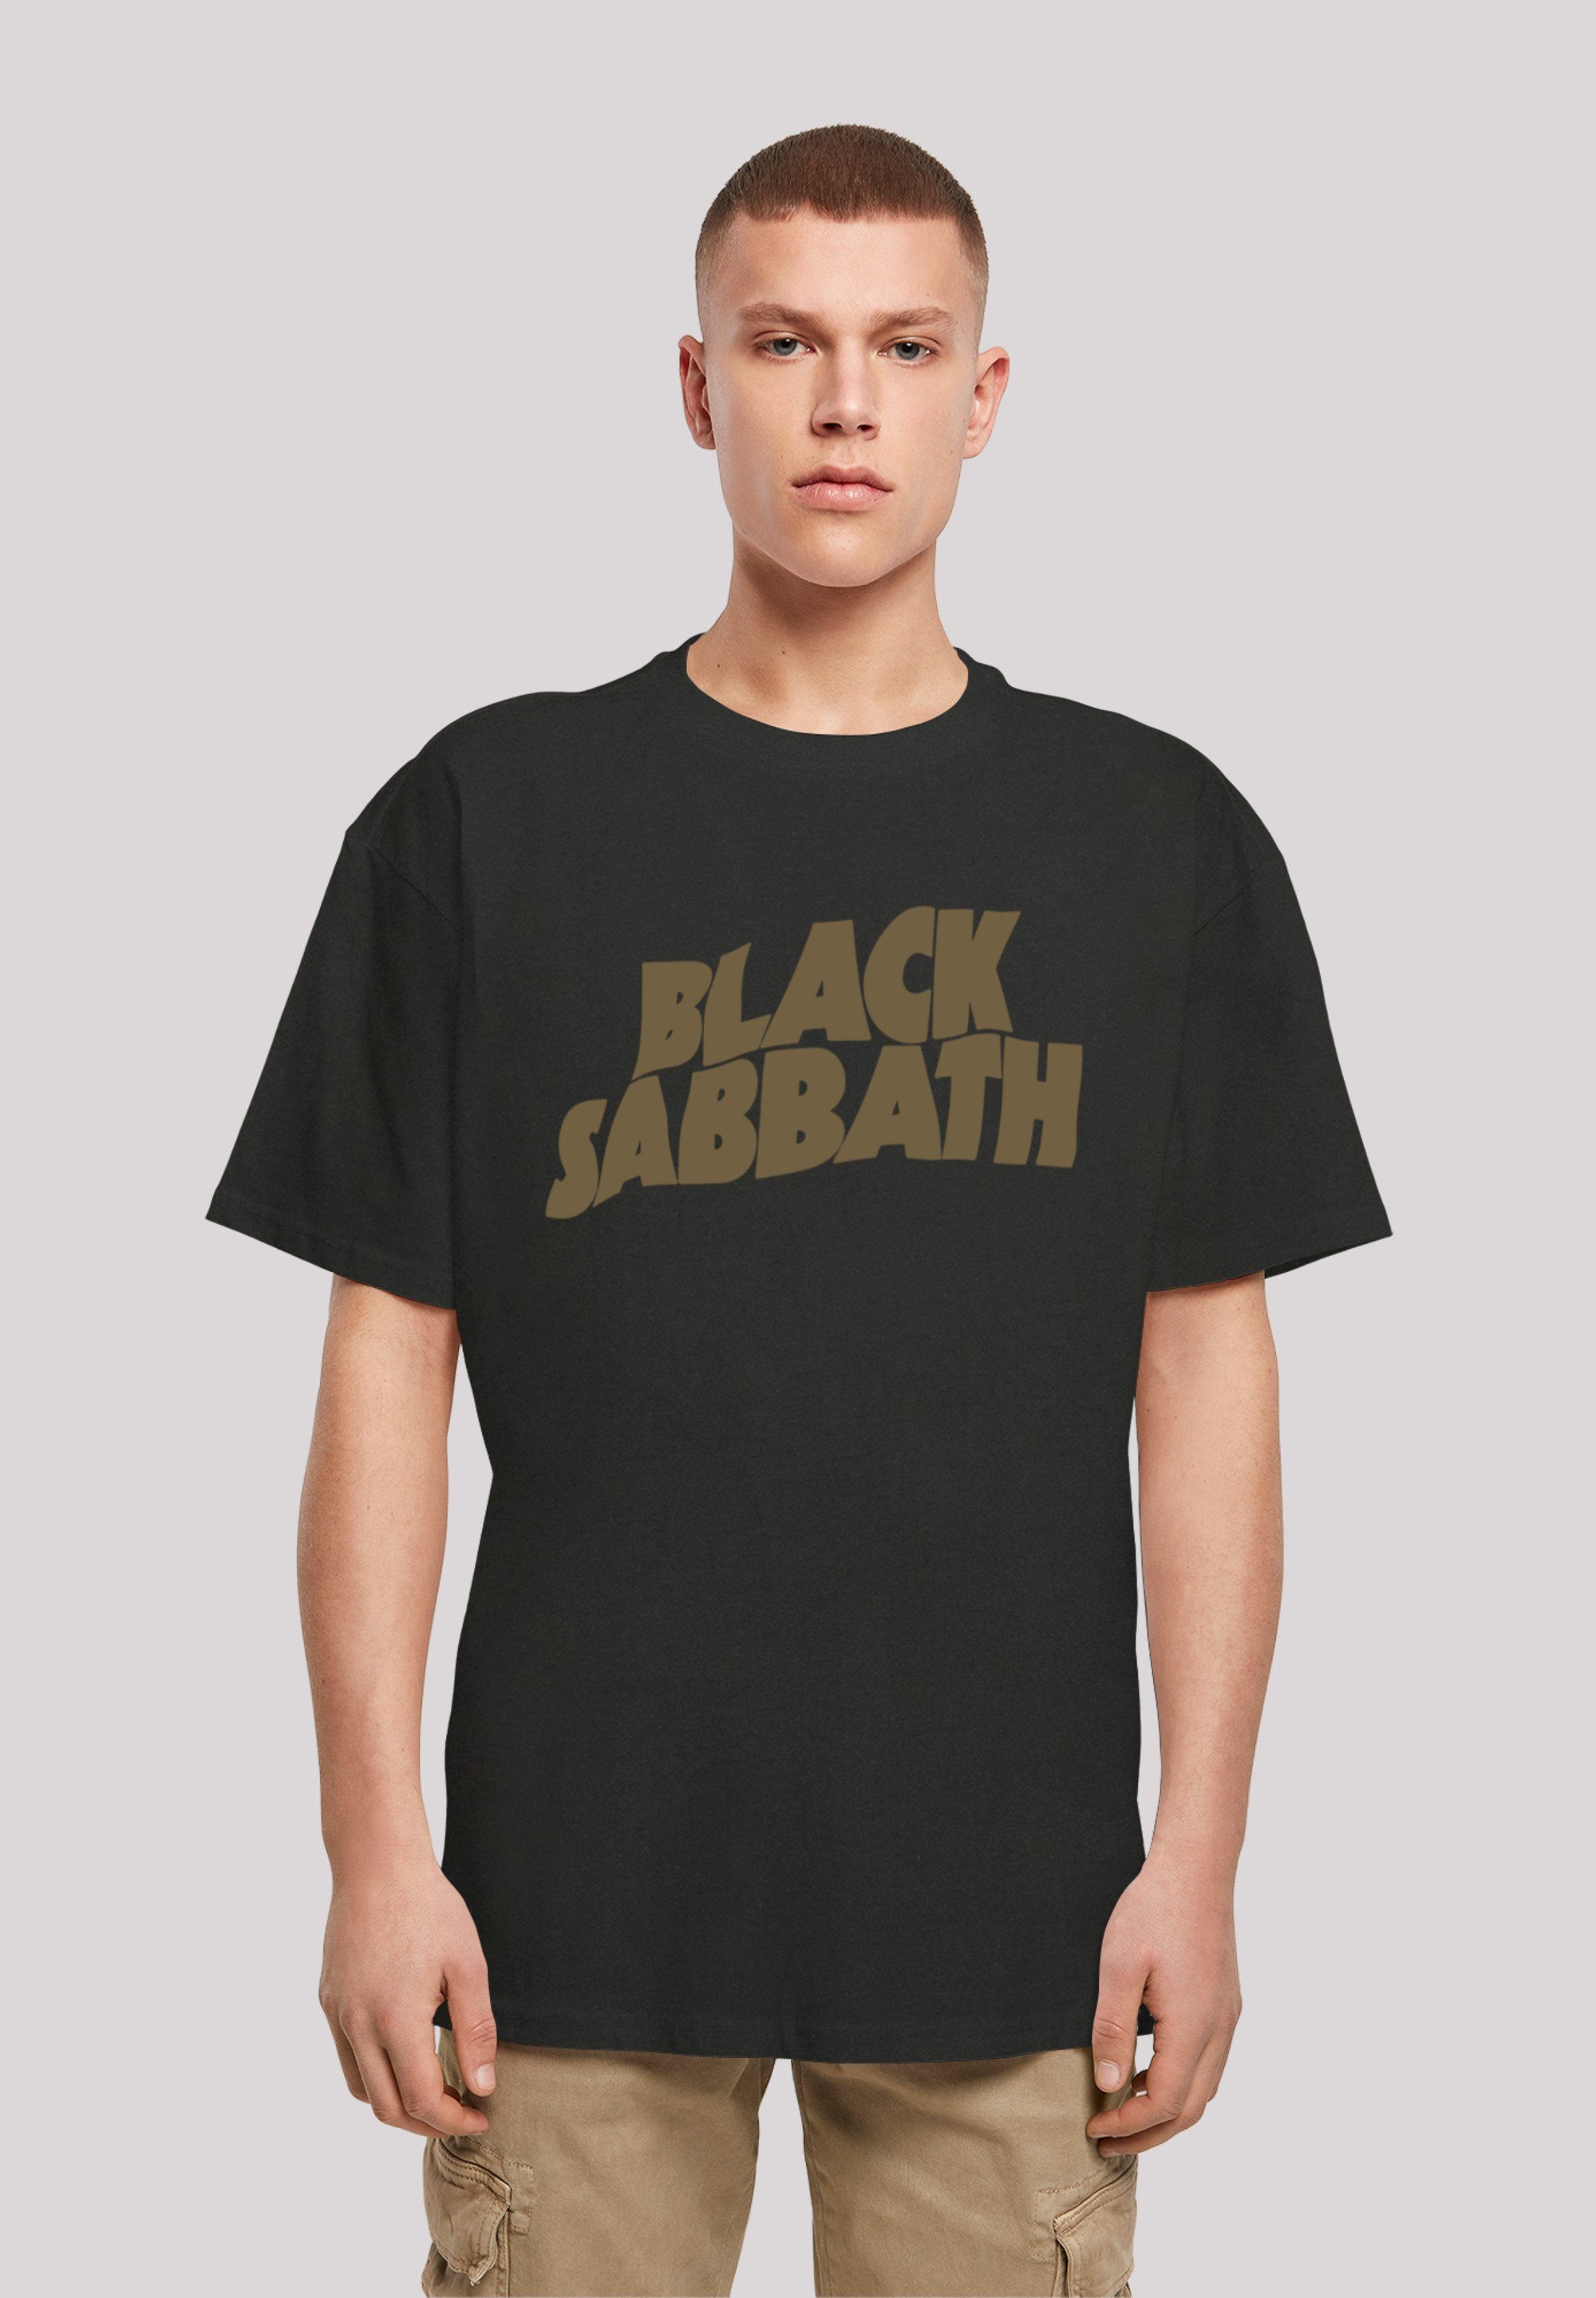 T-Shirt Print Black Sabbath Metal 1978 Zip Band Tour US F4NT4STIC Black